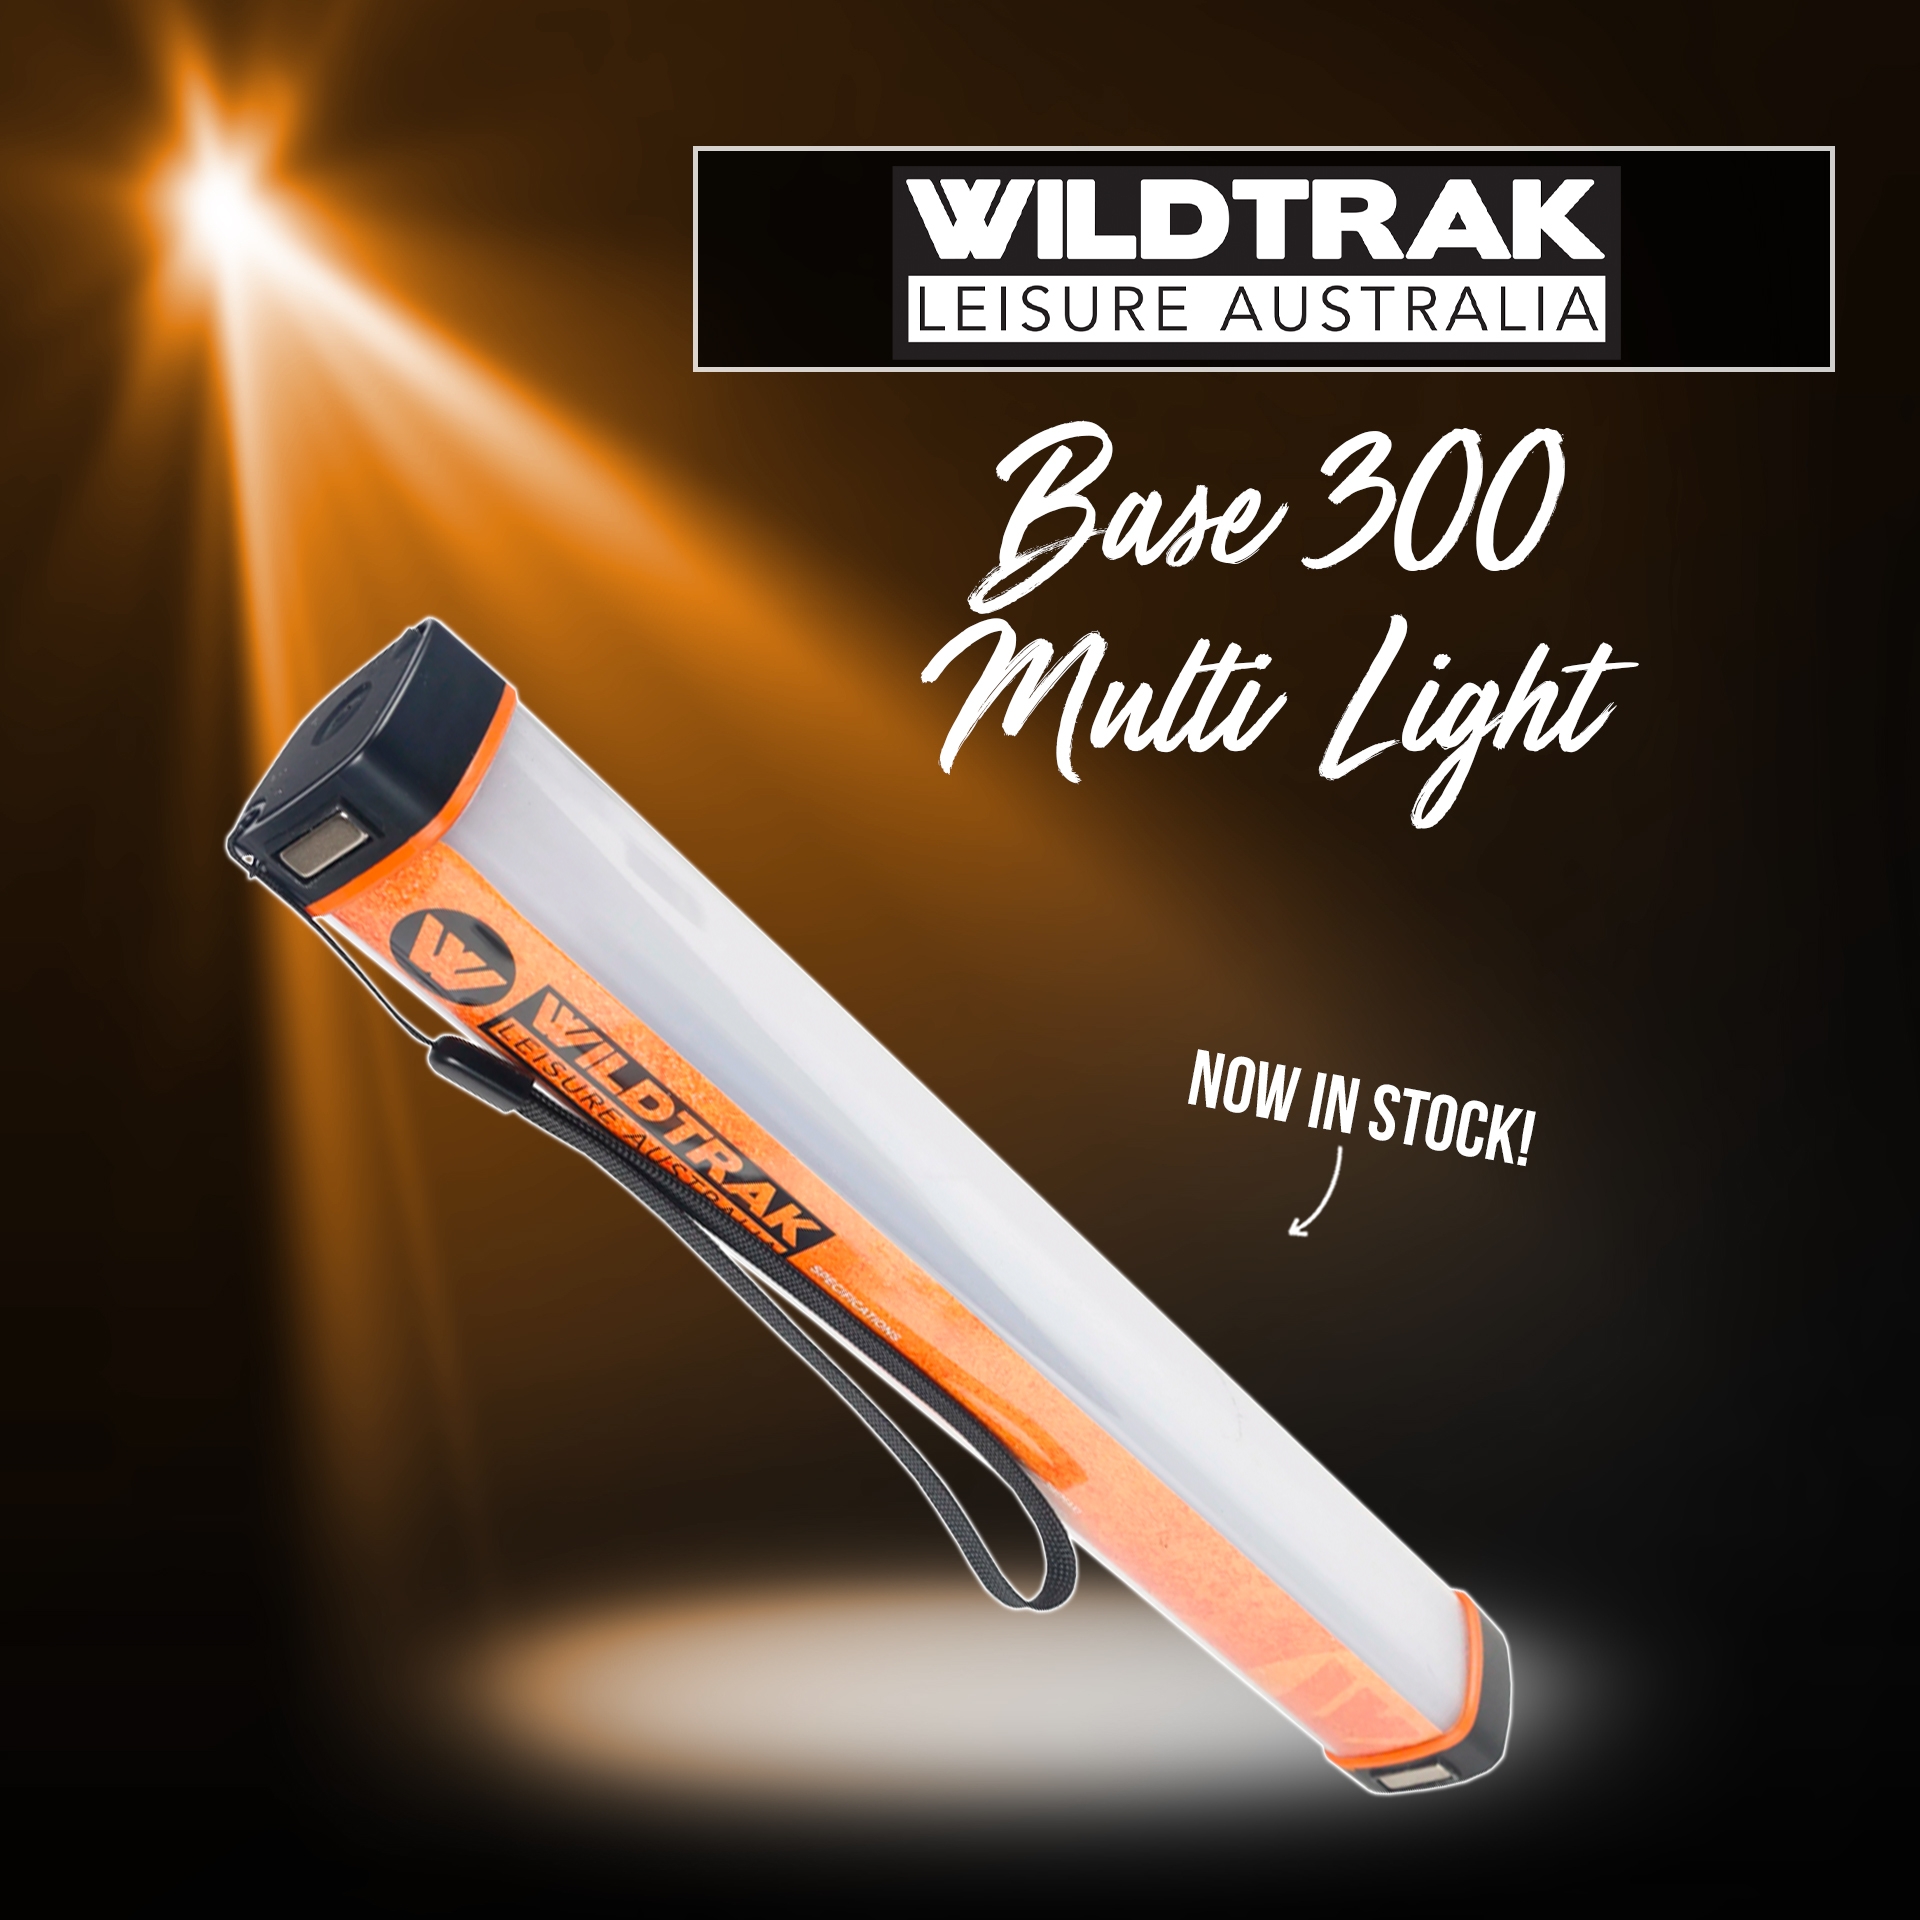 New - WILDTRAK BASE 300 MULTI-LIGHT